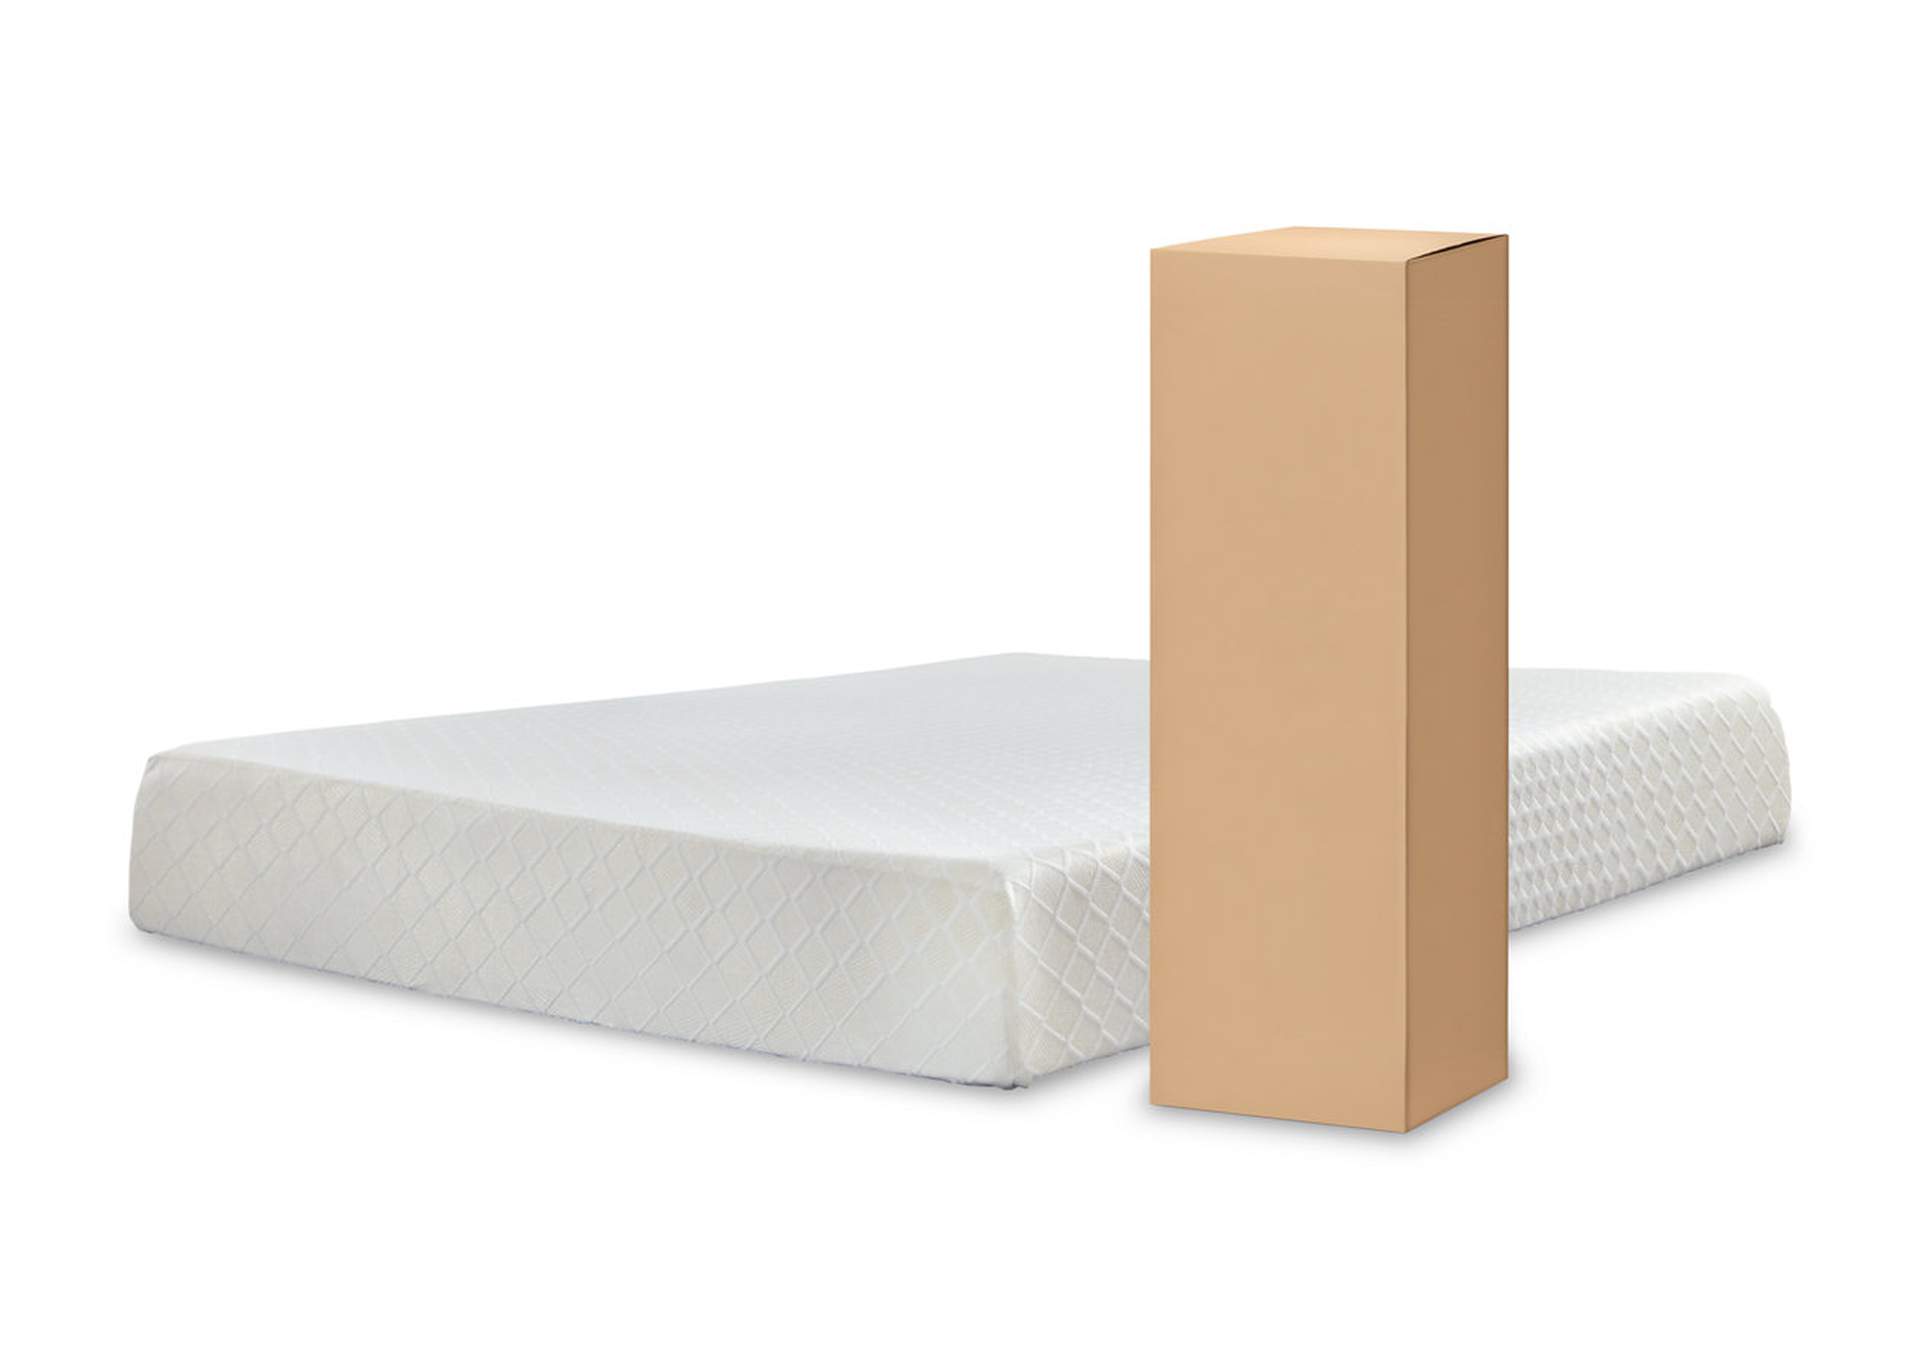 is chime express memory foam mattress good